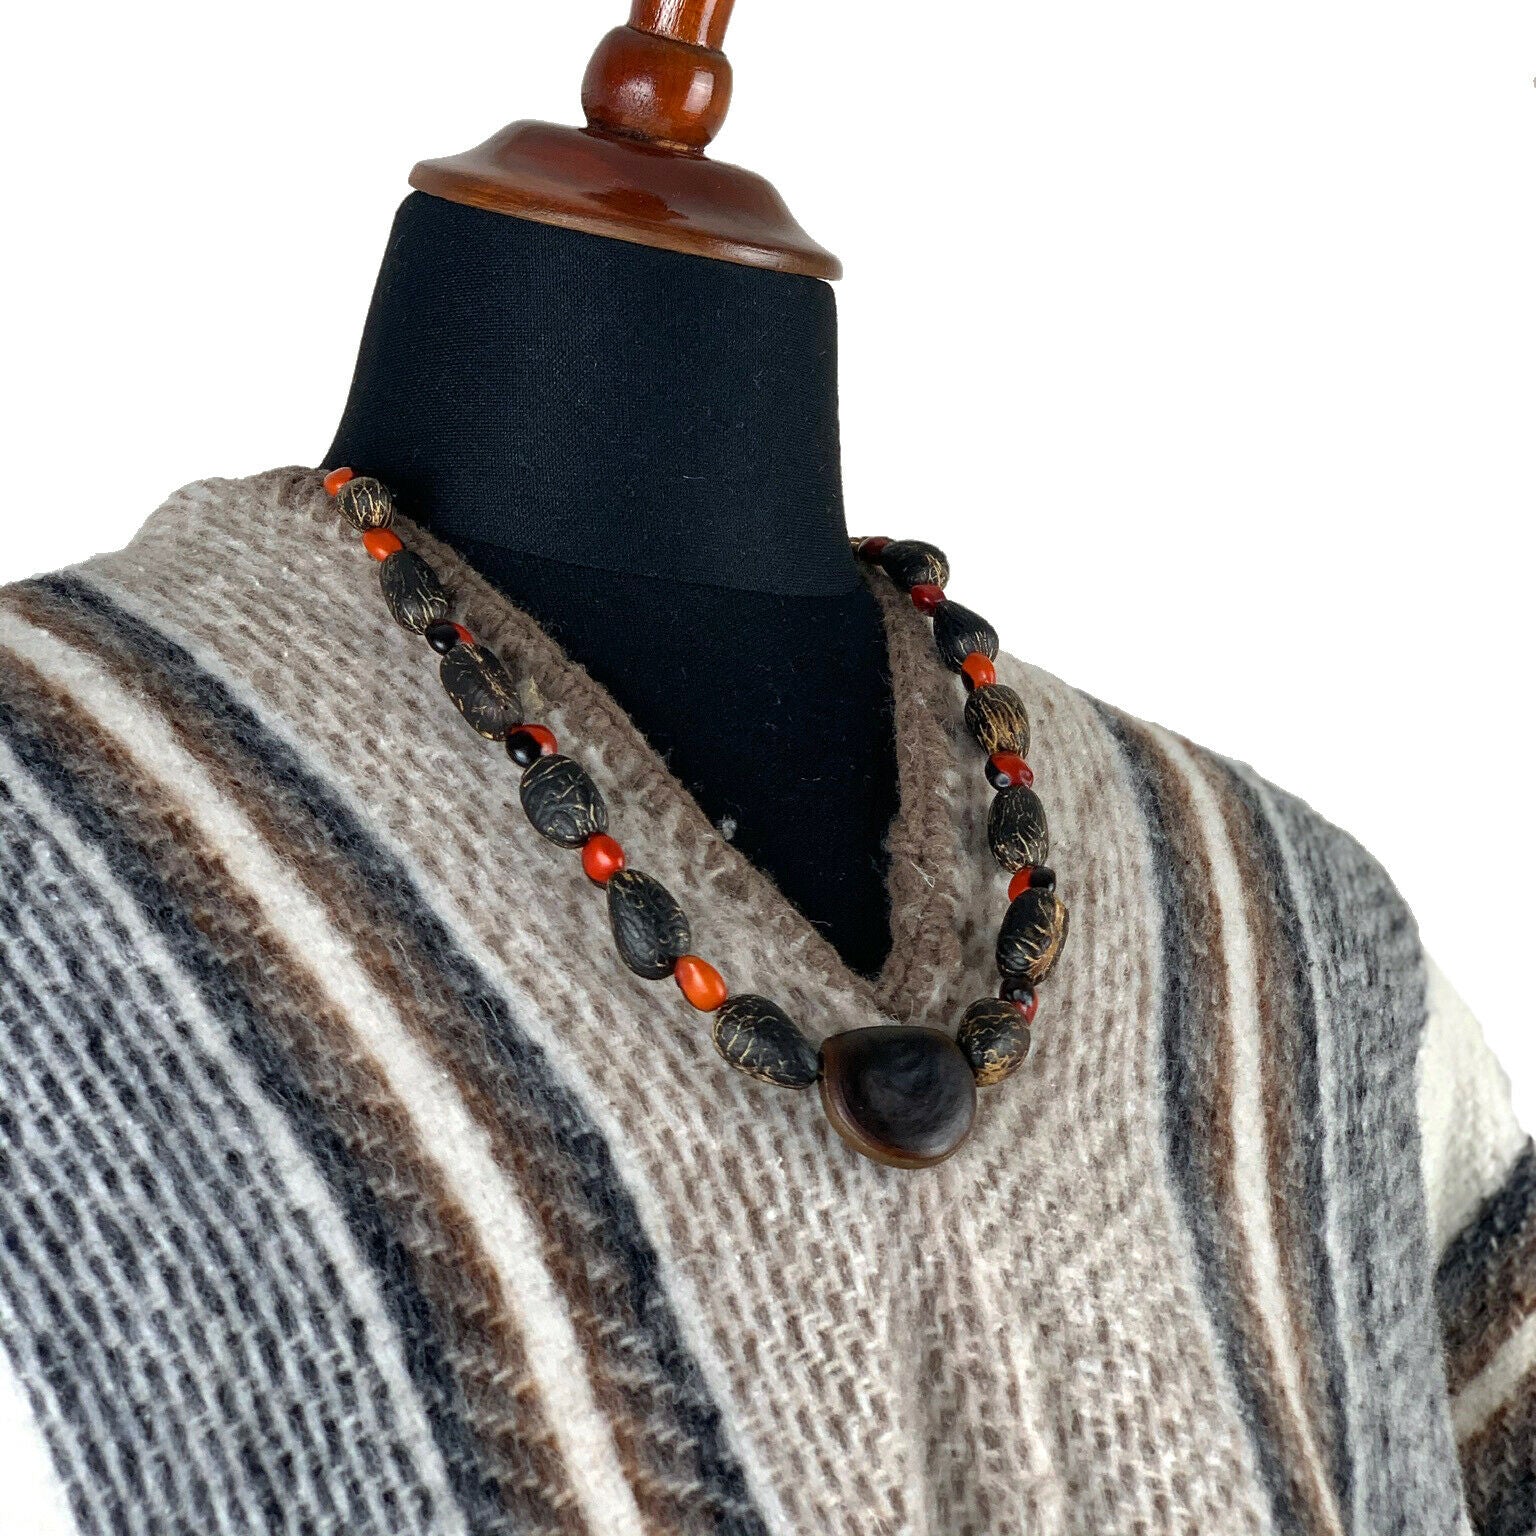 Llama Wool Unisex South American Handwoven Serape Poncho - M-XXL - striped pattern